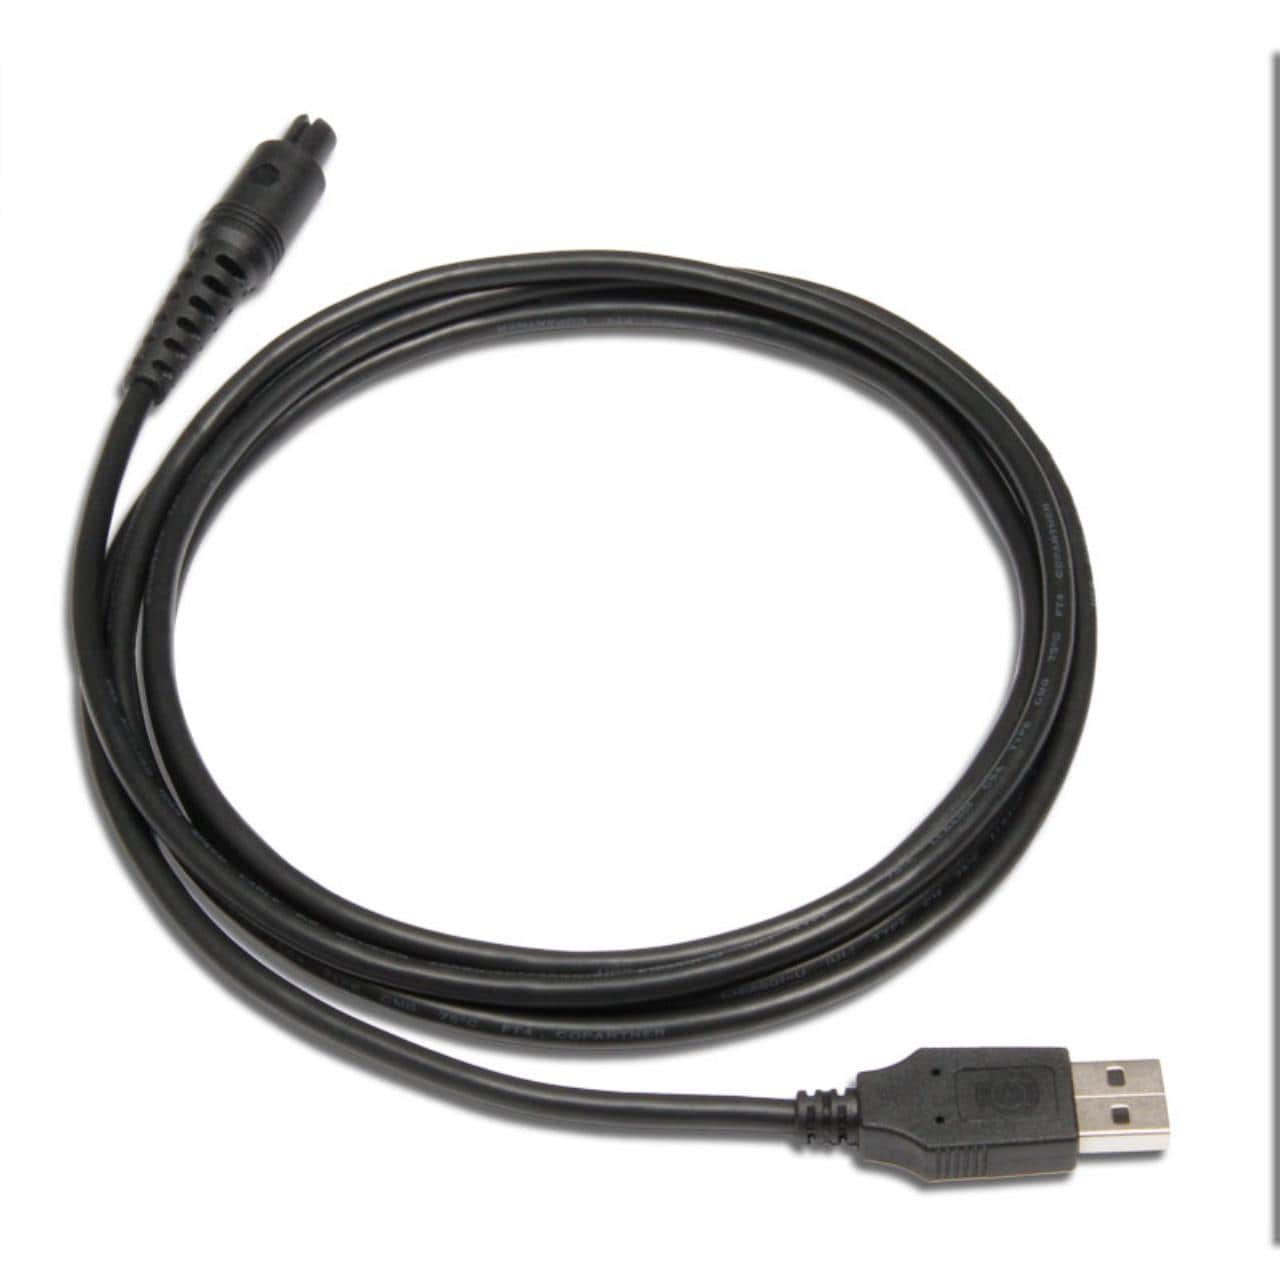 CTEK 40-464 USB-C® Ladekabel Zigarettenanzünder (21 mm Innen-Ø) CS FREE USB- C Ladekabel, 12V Anschluß – Conrad Electronic Schweiz